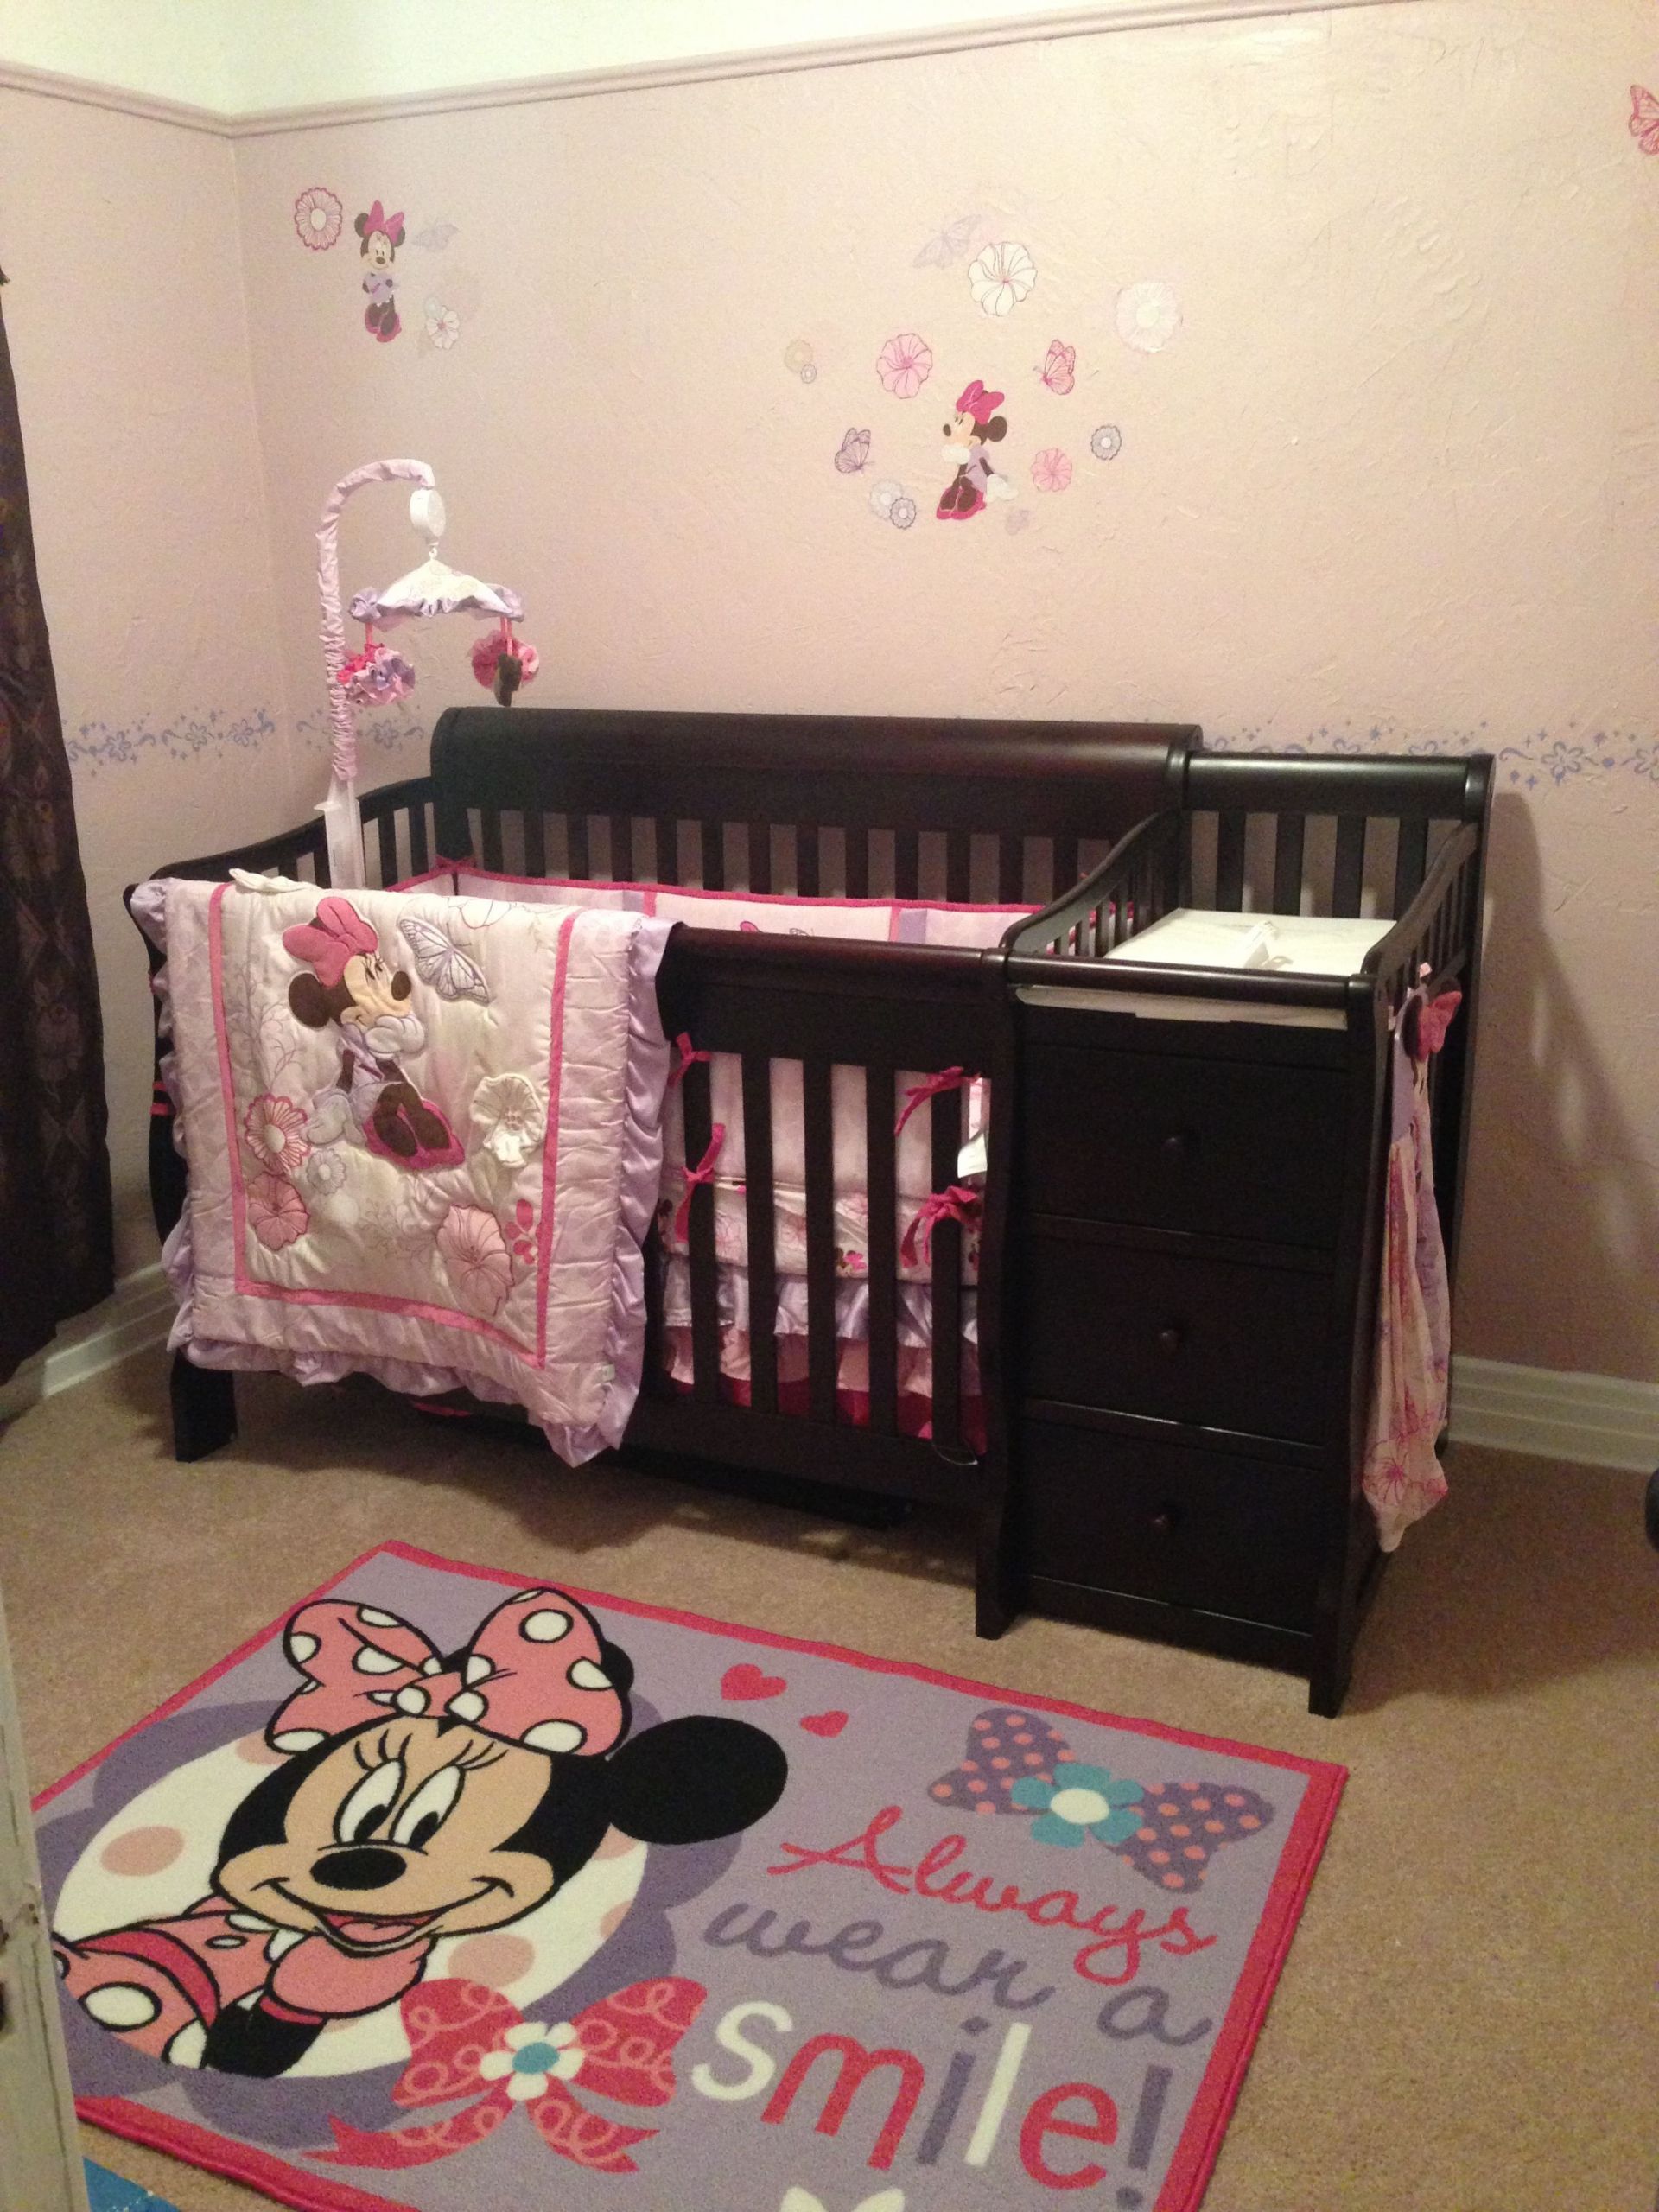 Minnie Mouse Baby Room Decor
 Minnie Mouse Nursery